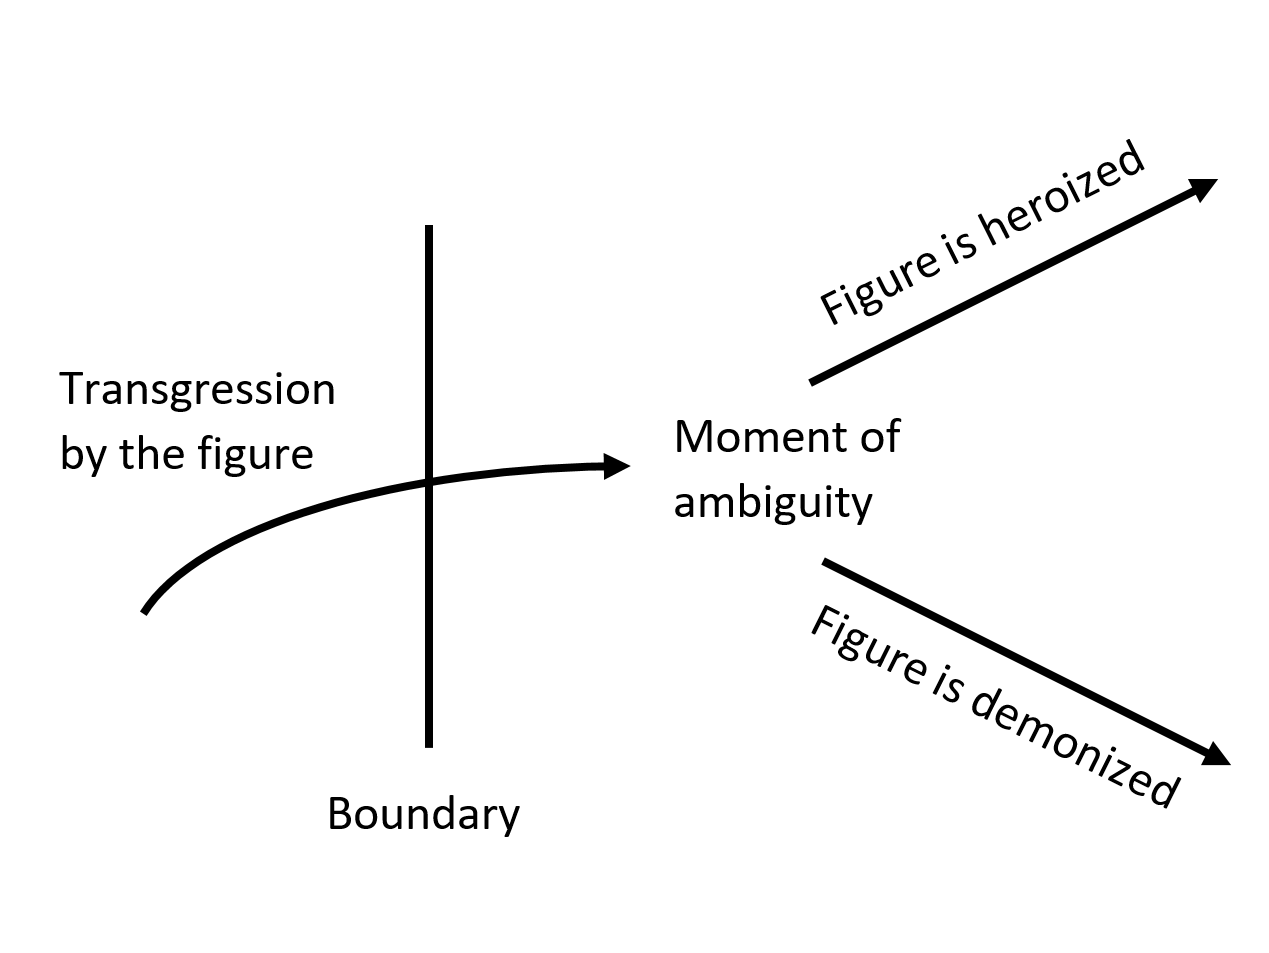 Visualisation of the trangression process